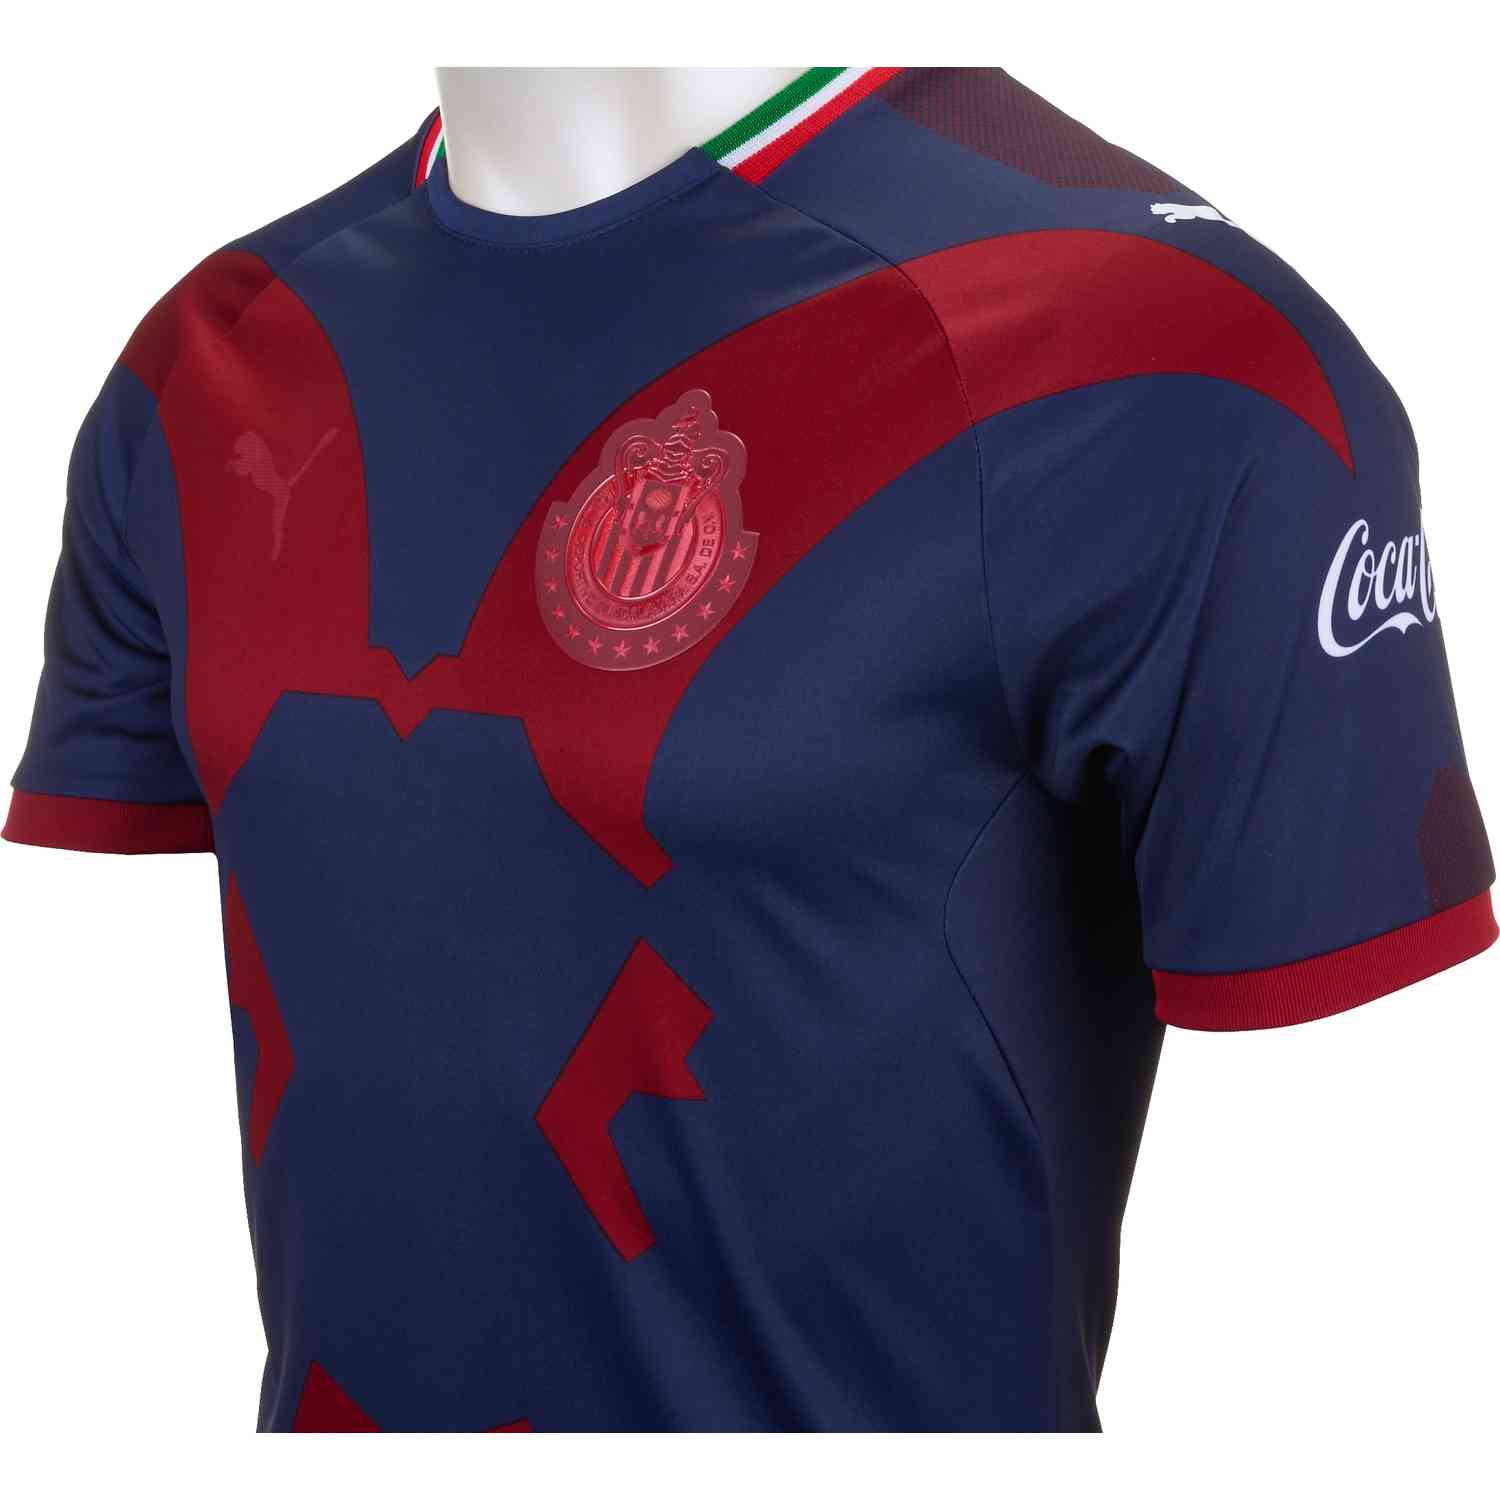 chivas authentic jersey 2019